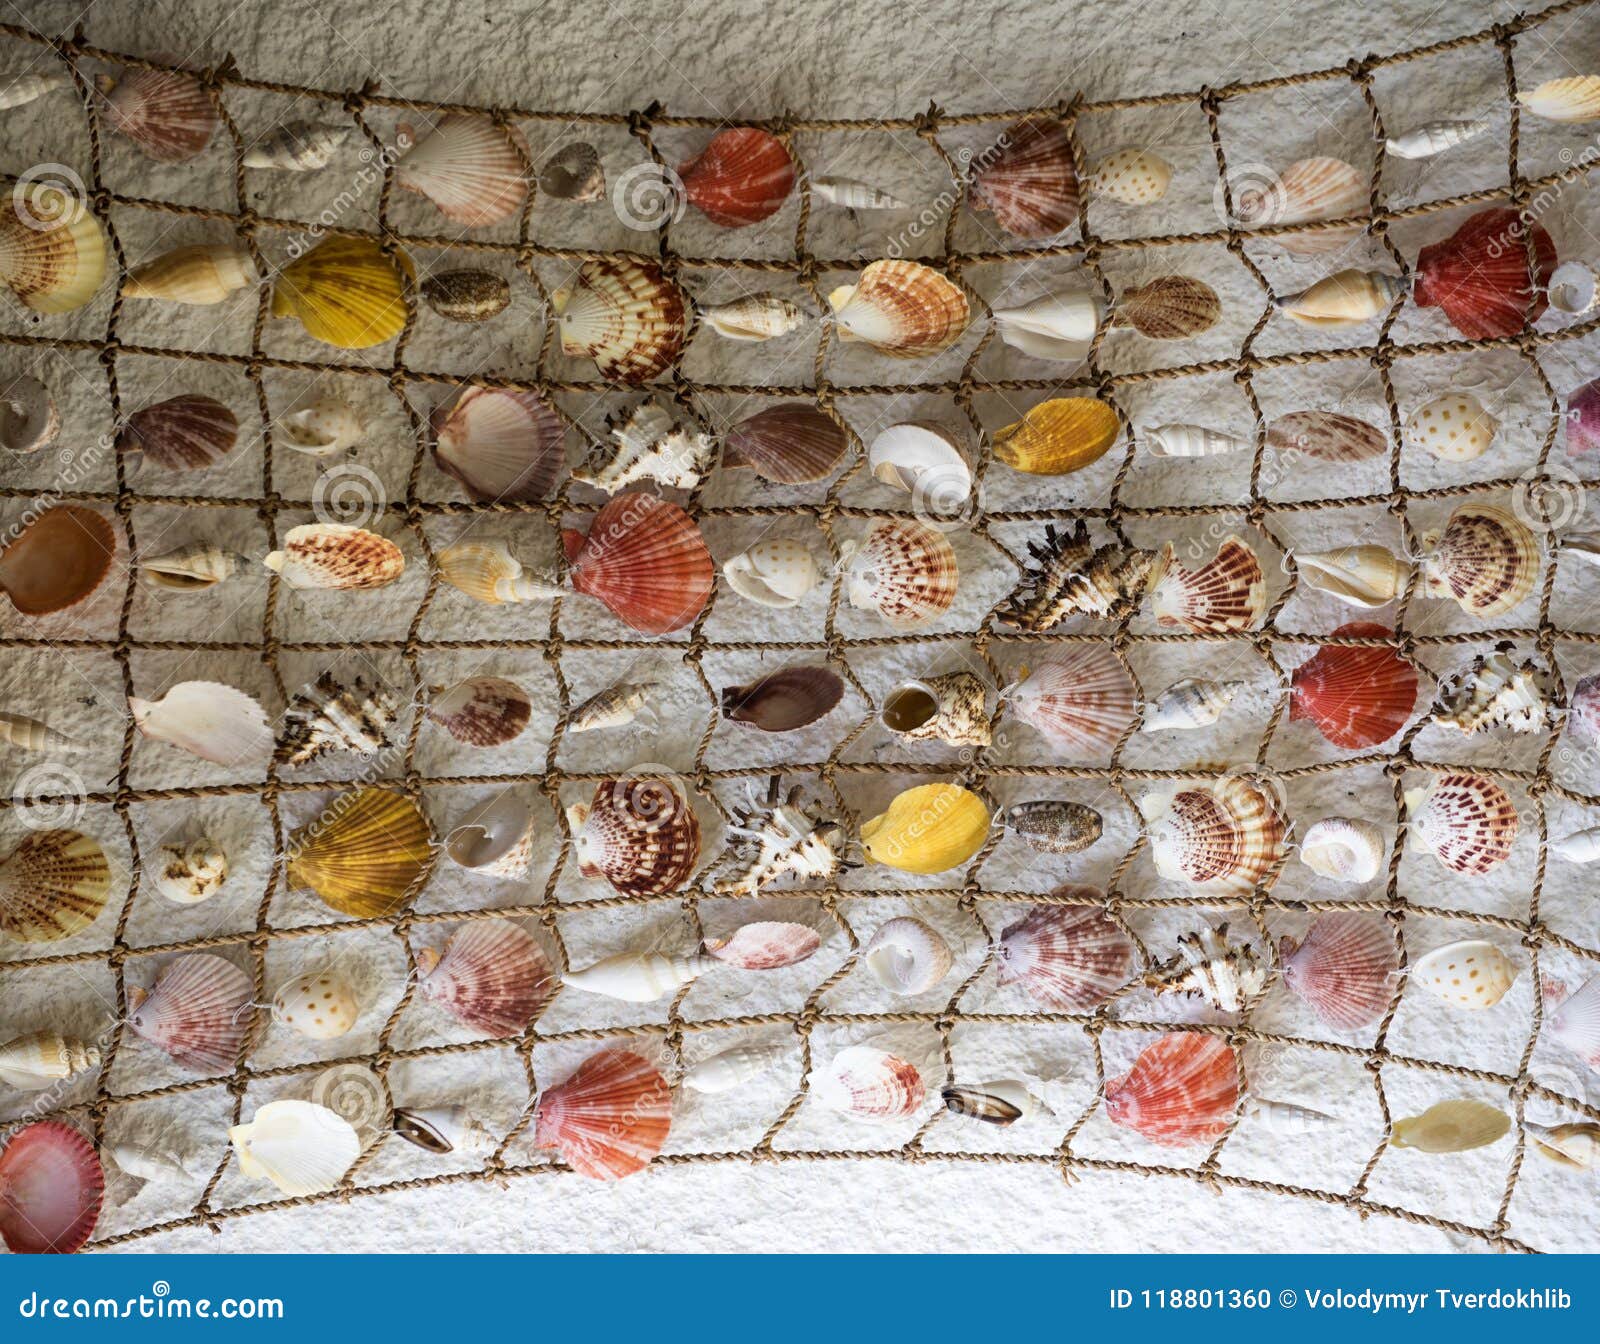 https://thumbs.dreamstime.com/z/fishing-net-seashells-network-beautiful-seashells-as-decor-sea-decor-design-concept-decoration-fishing-net-118801360.jpg